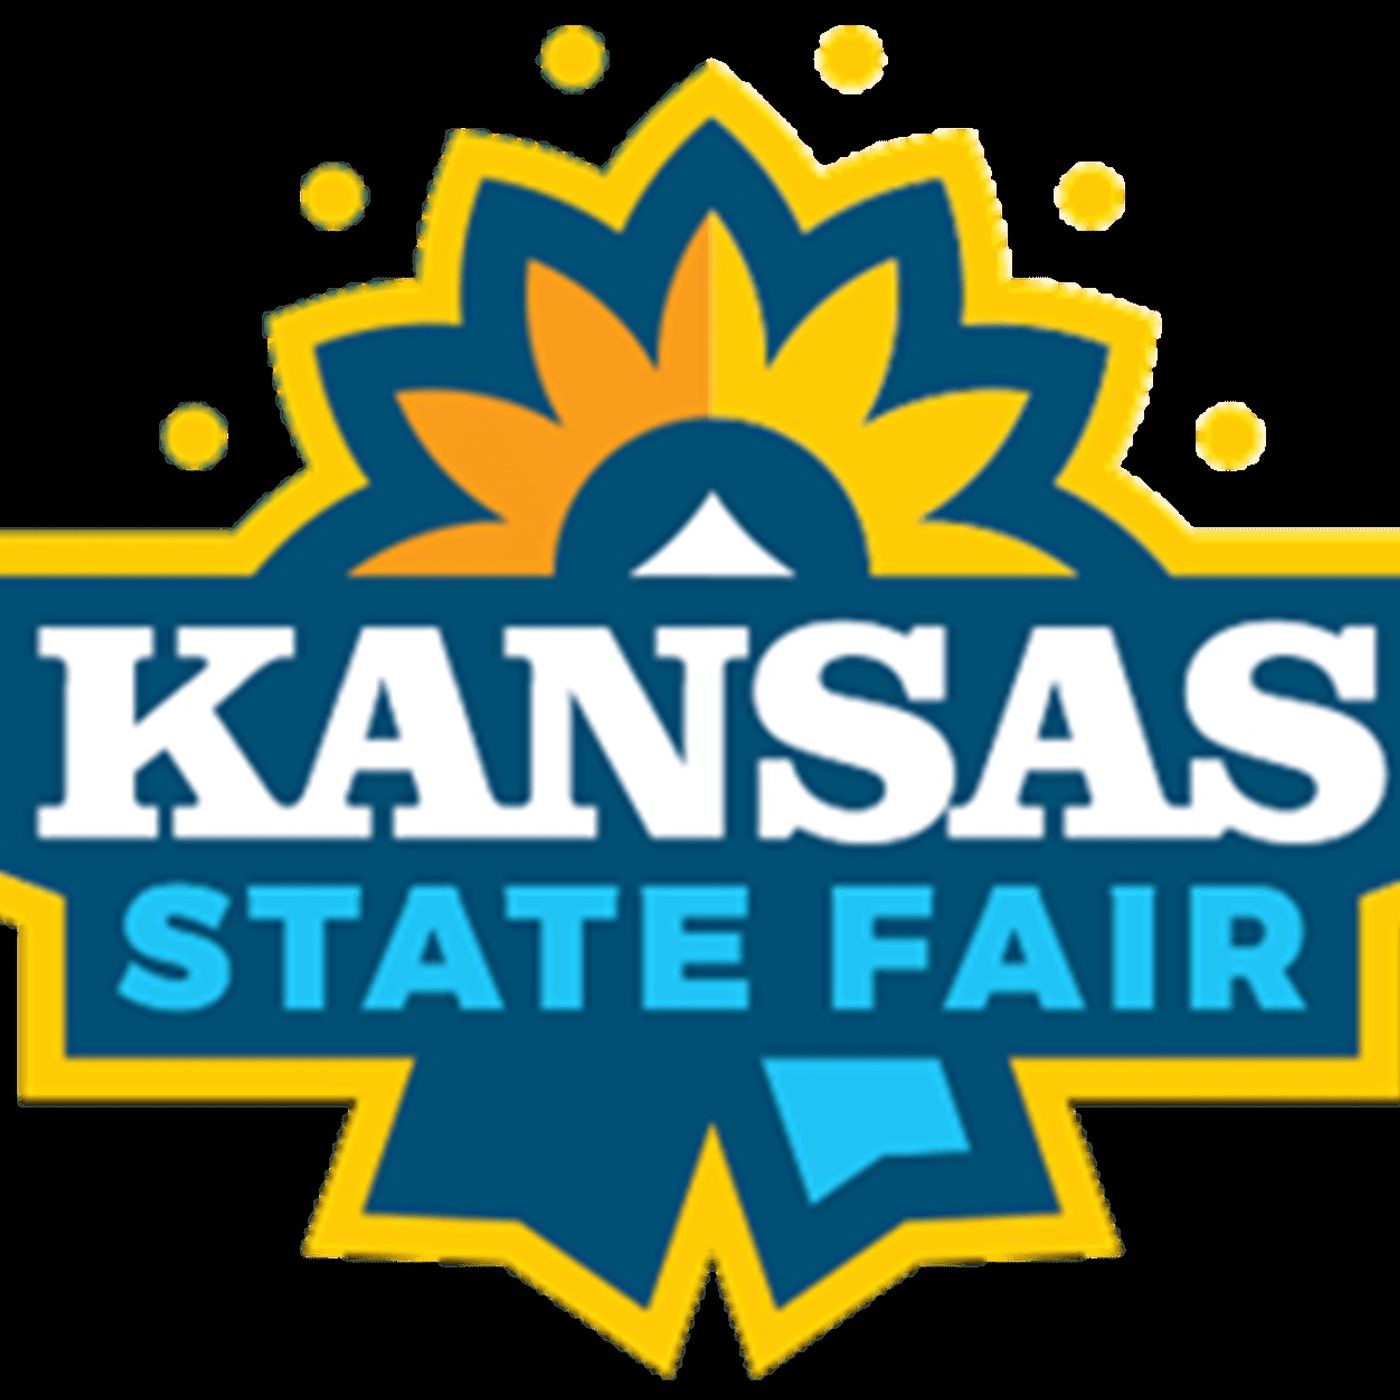 Kansas State Fair 2019